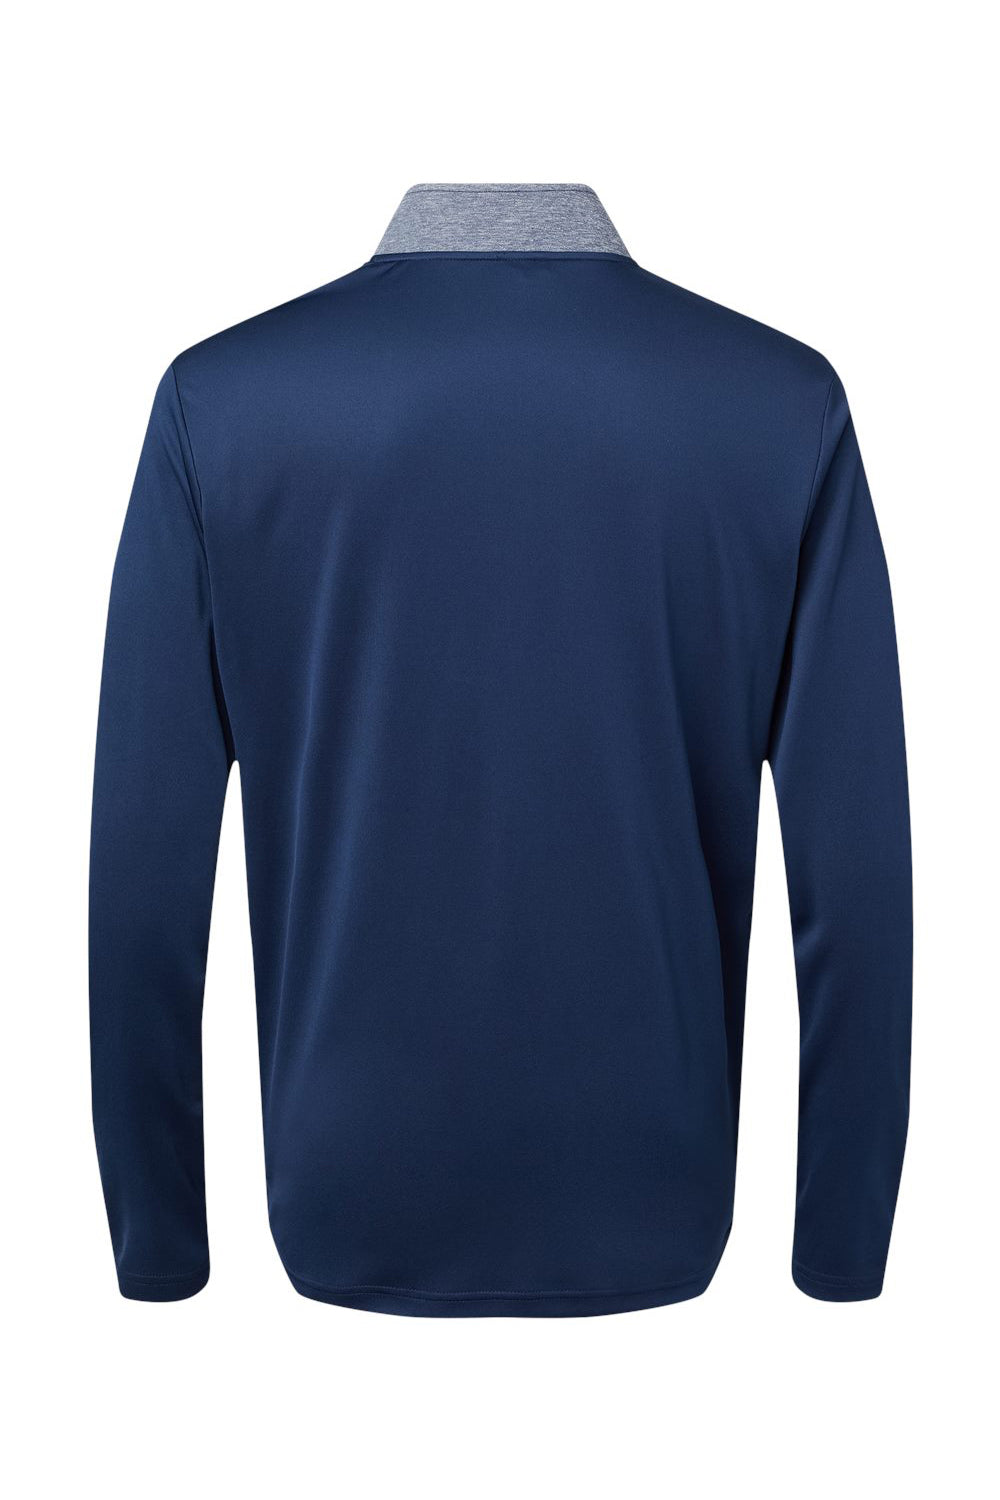 Adidas A522 Mens Heather Block Print Moisture Wicking 1/4 Zip Sweatshirt Collegiate Navy Blue Melange/Navy Blue/Grey Flat Back